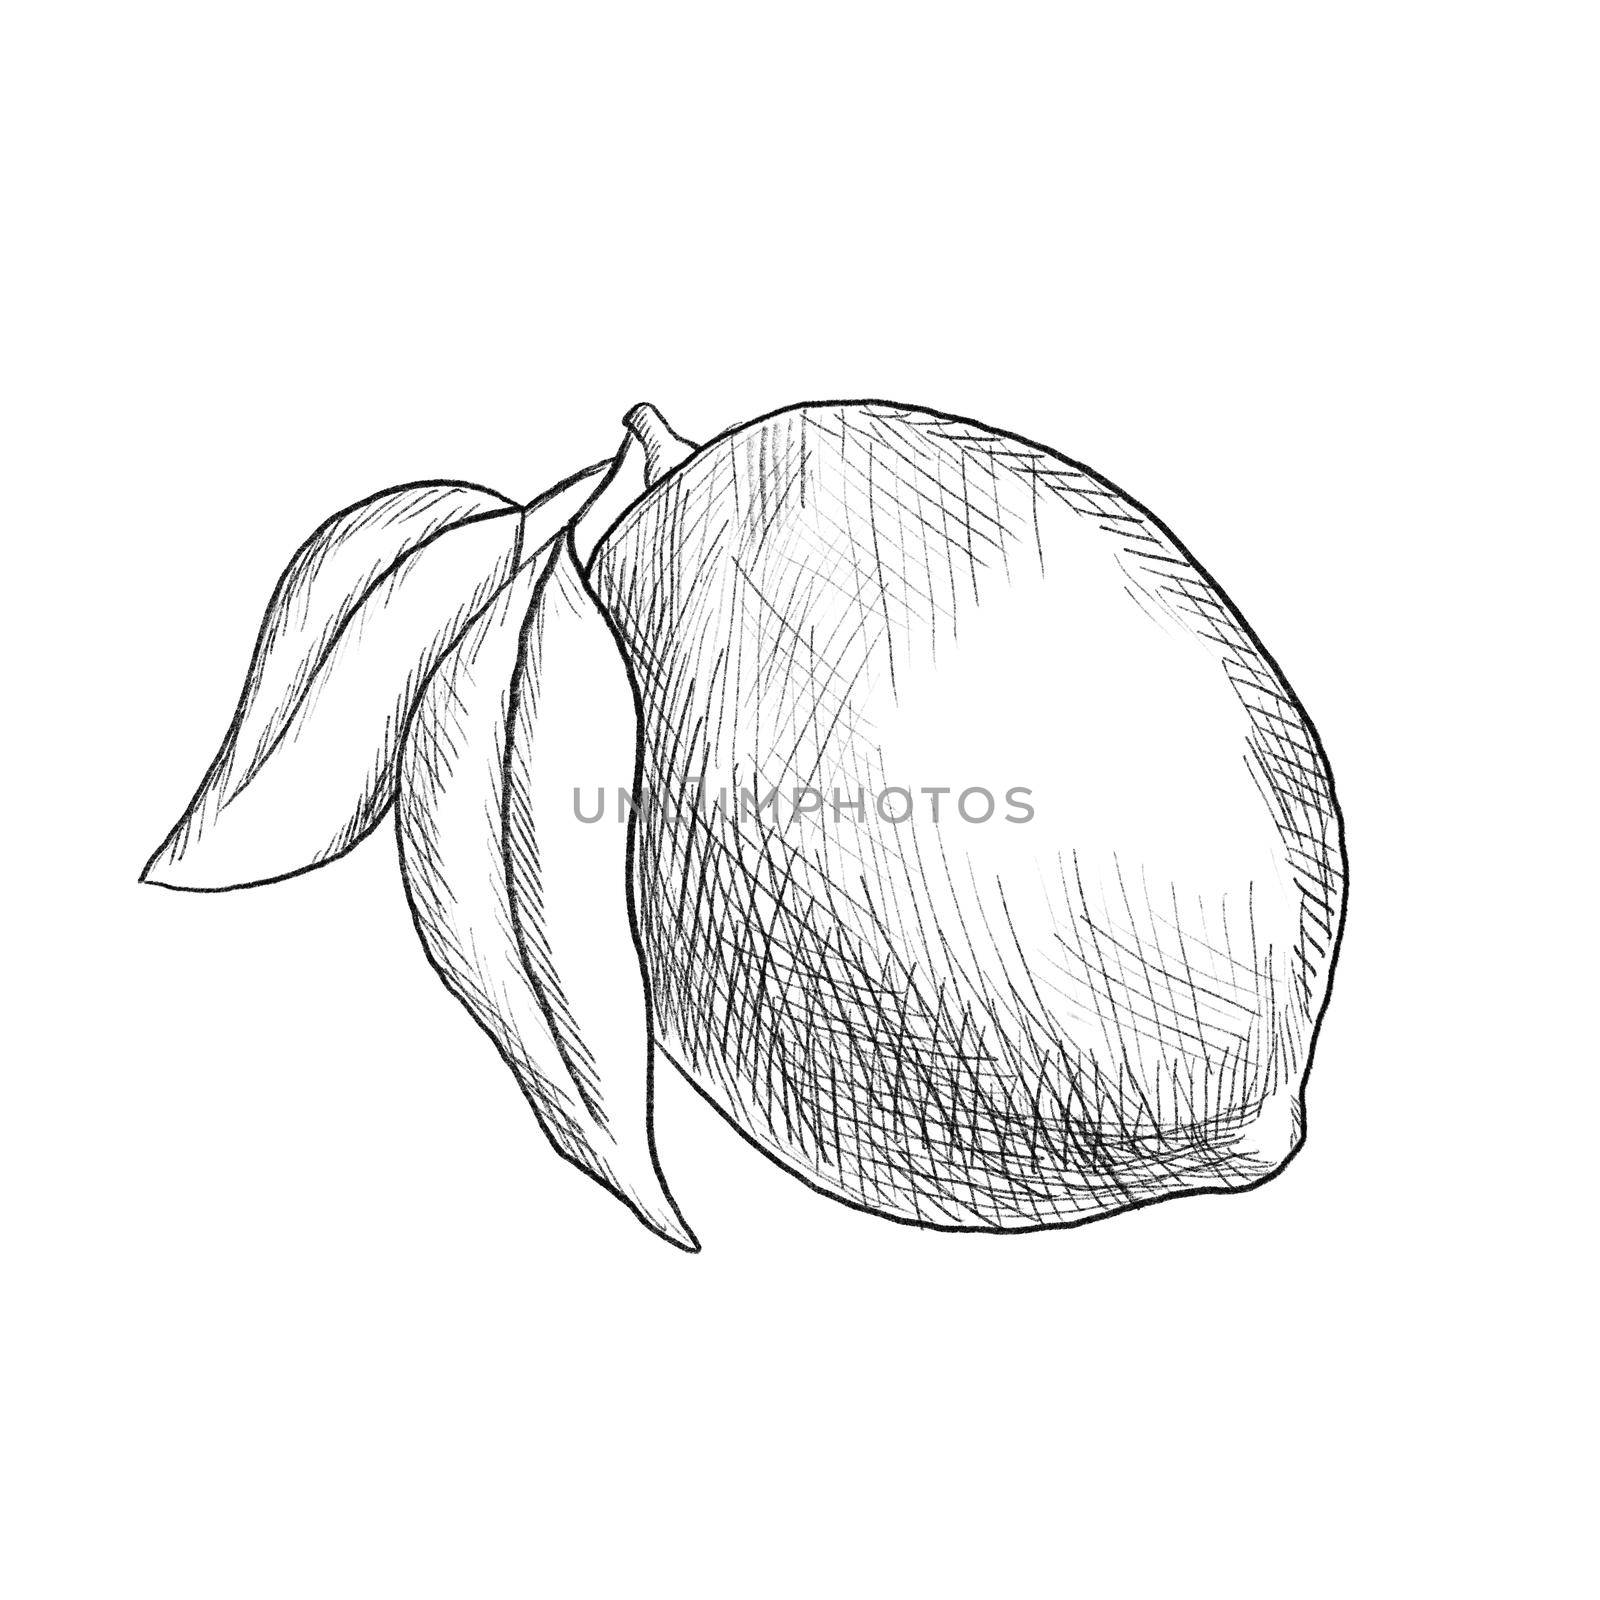 Lemon sketch. Monochrome Illustration isolated on white. Citrus fruit with leaves